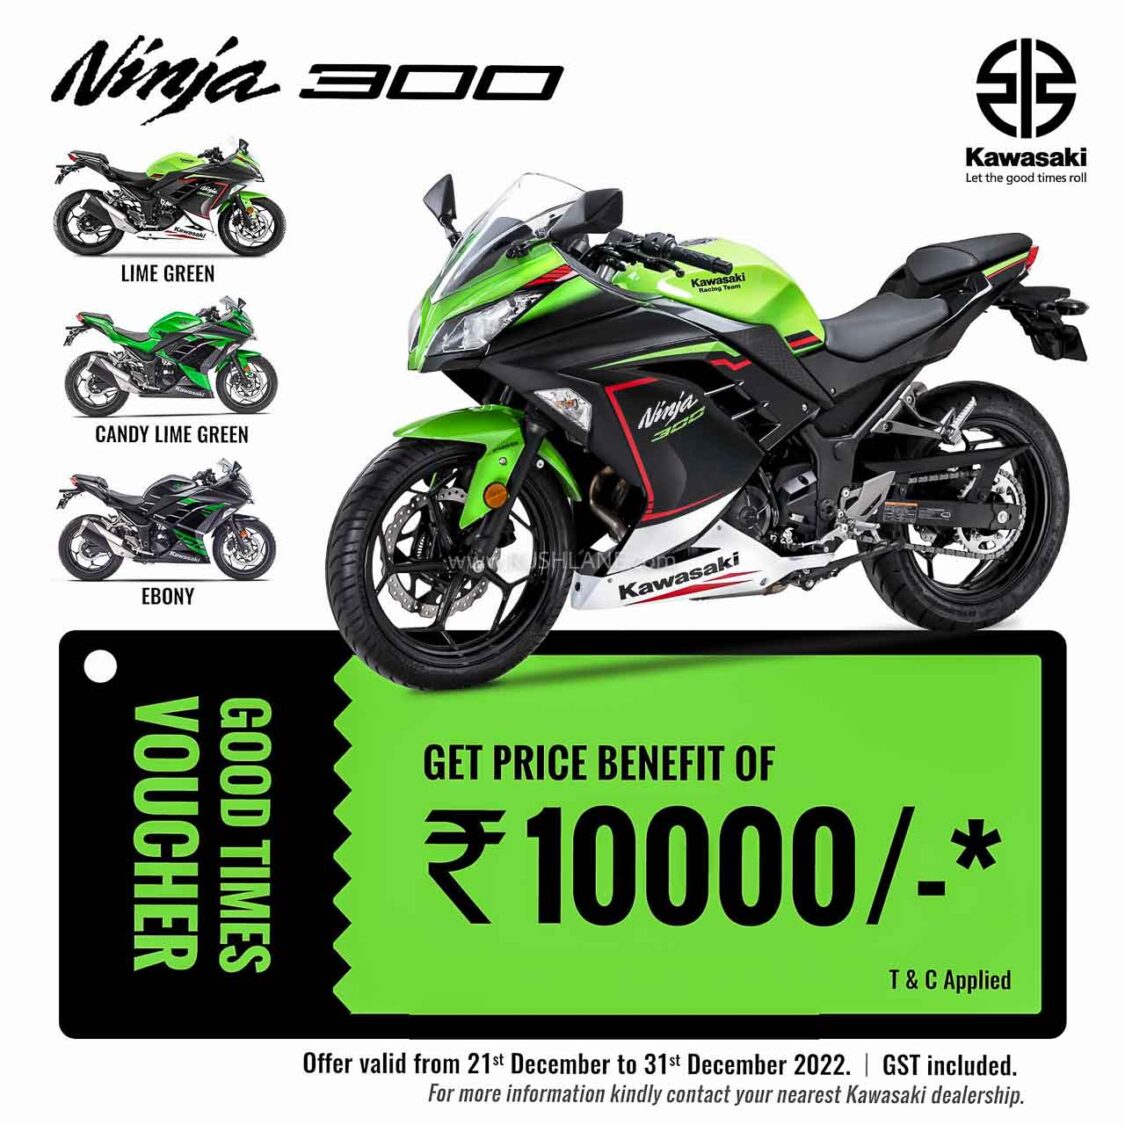 Kawasaki Ninja 300 Price Cut - Z650 Benefits Of Rs 35k Offer